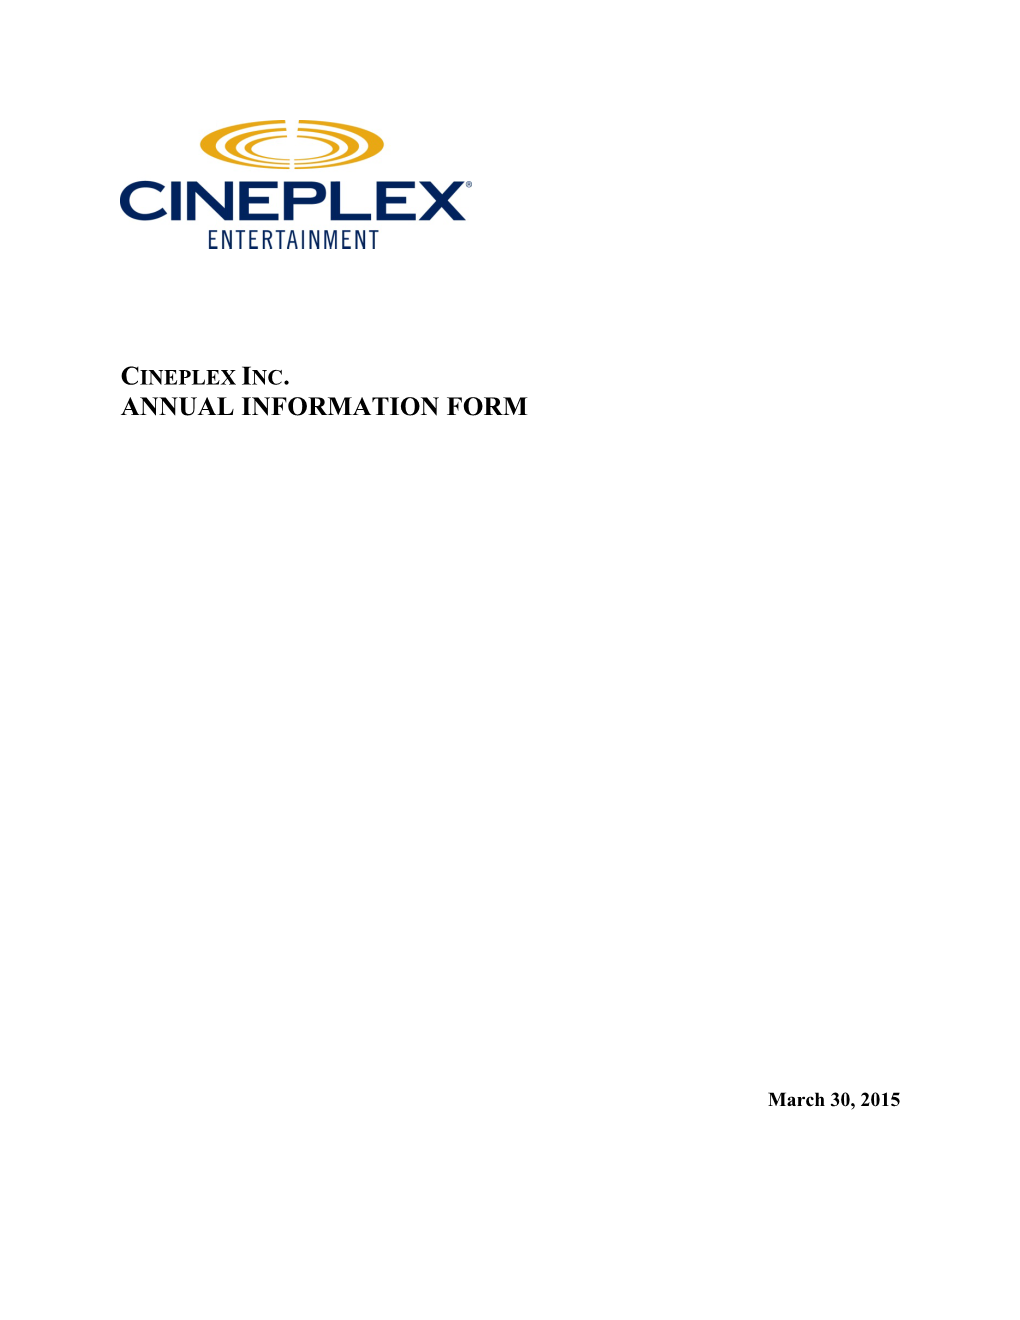 Cineplex Inc. Annual Information Form